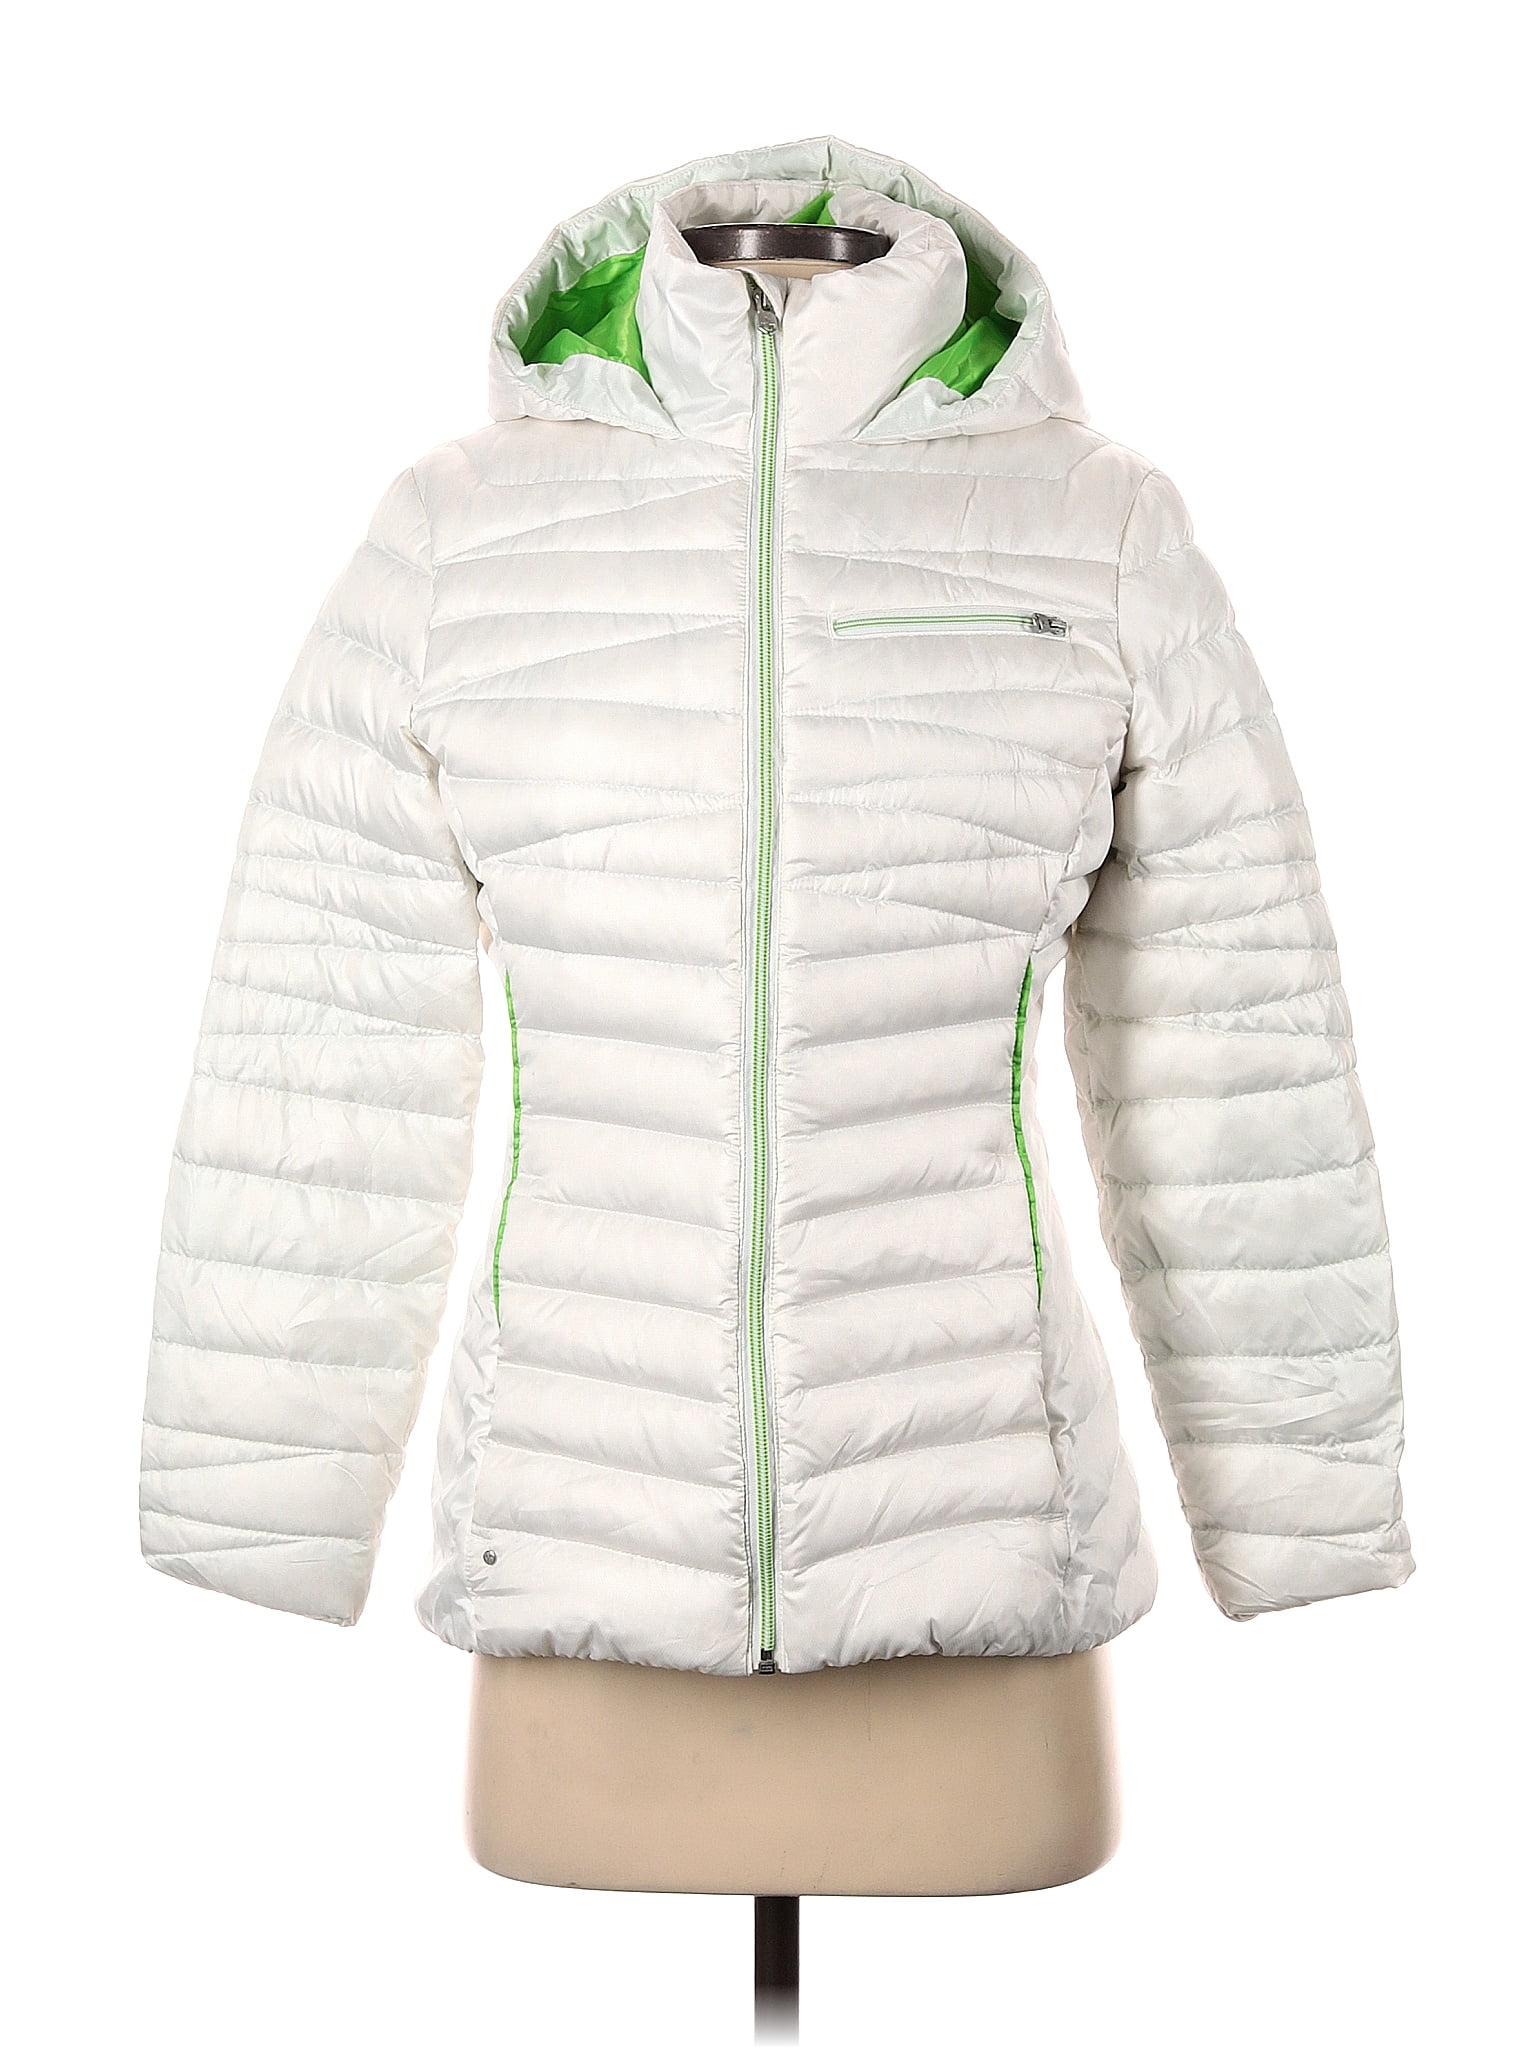 Spyder women's XS white coat jacket - Gem